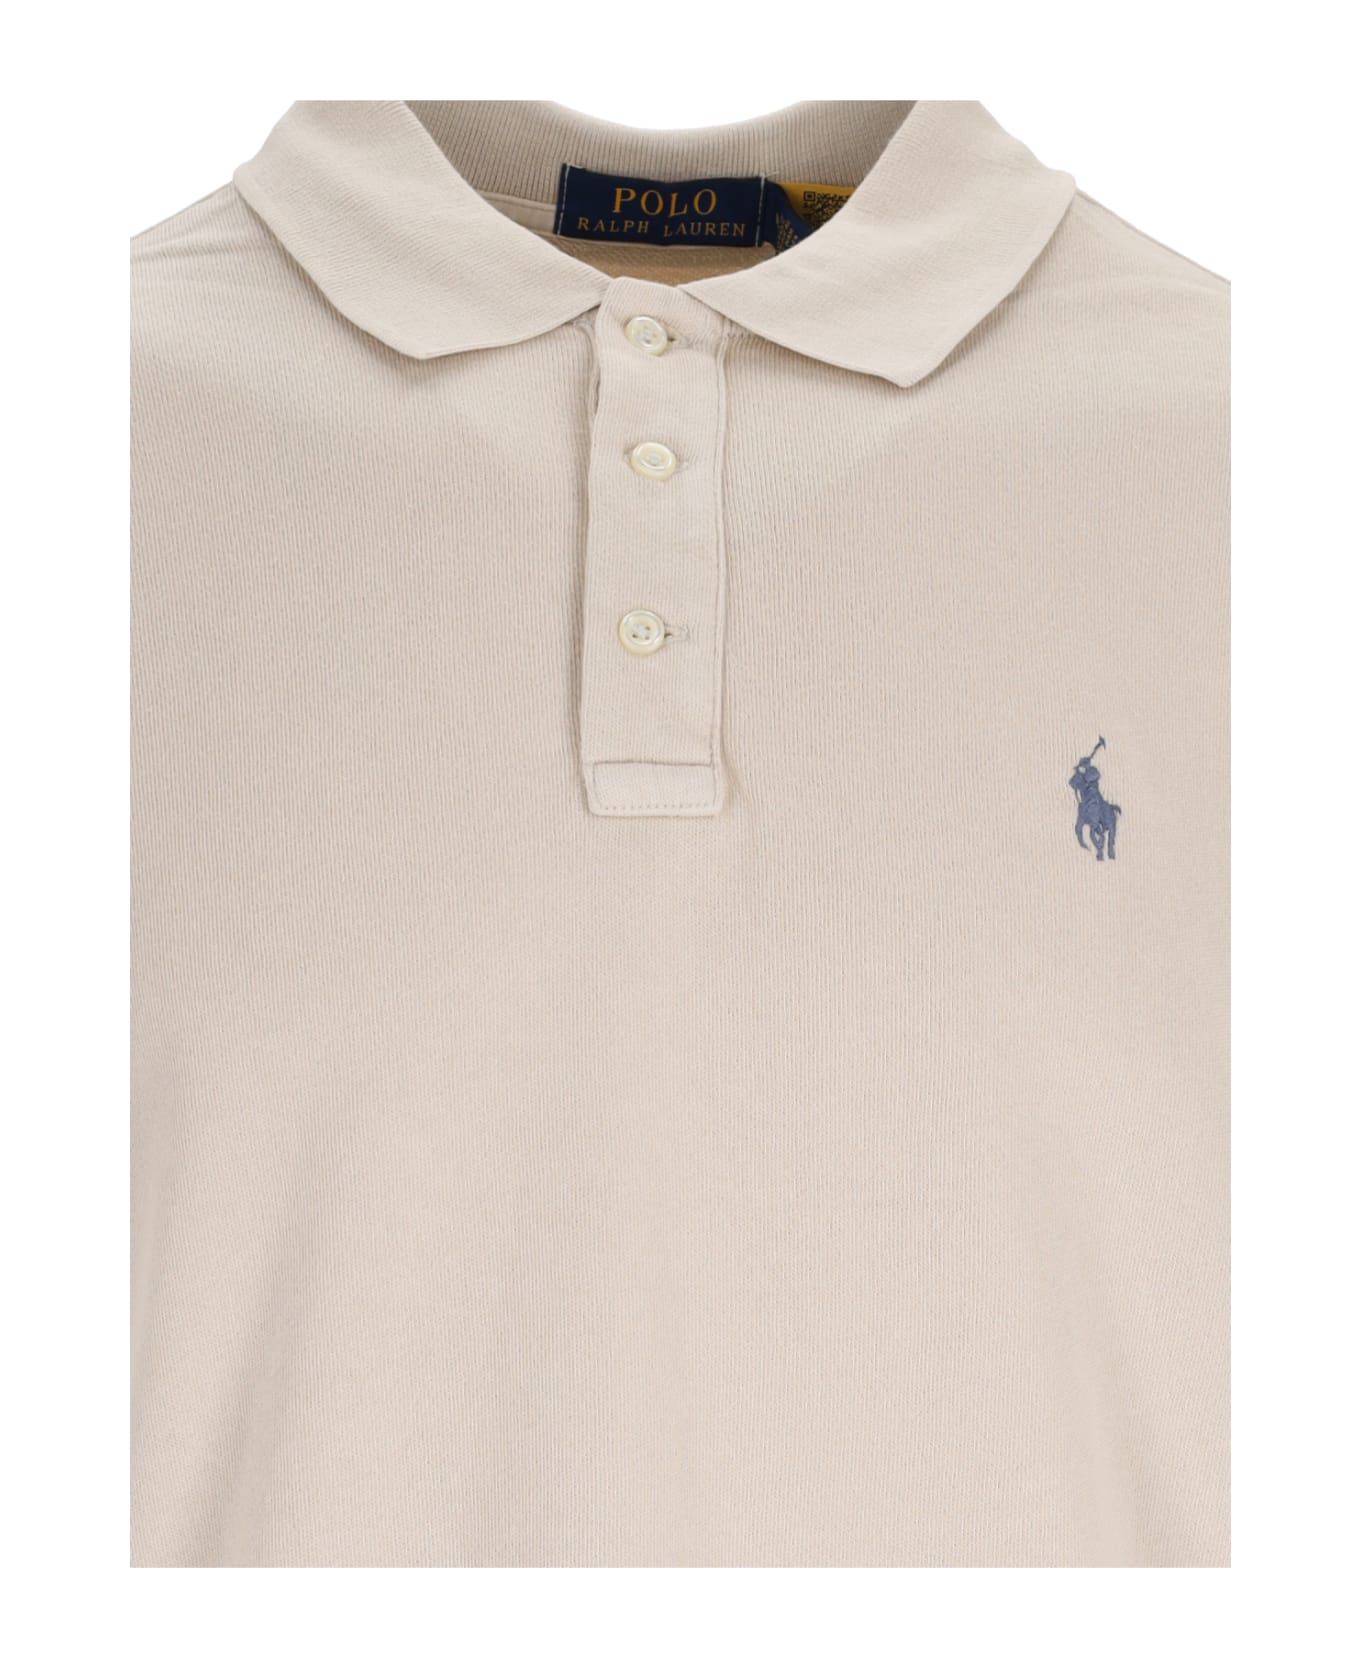 Polo Ralph Lauren Logo Polo Shirt - Beige